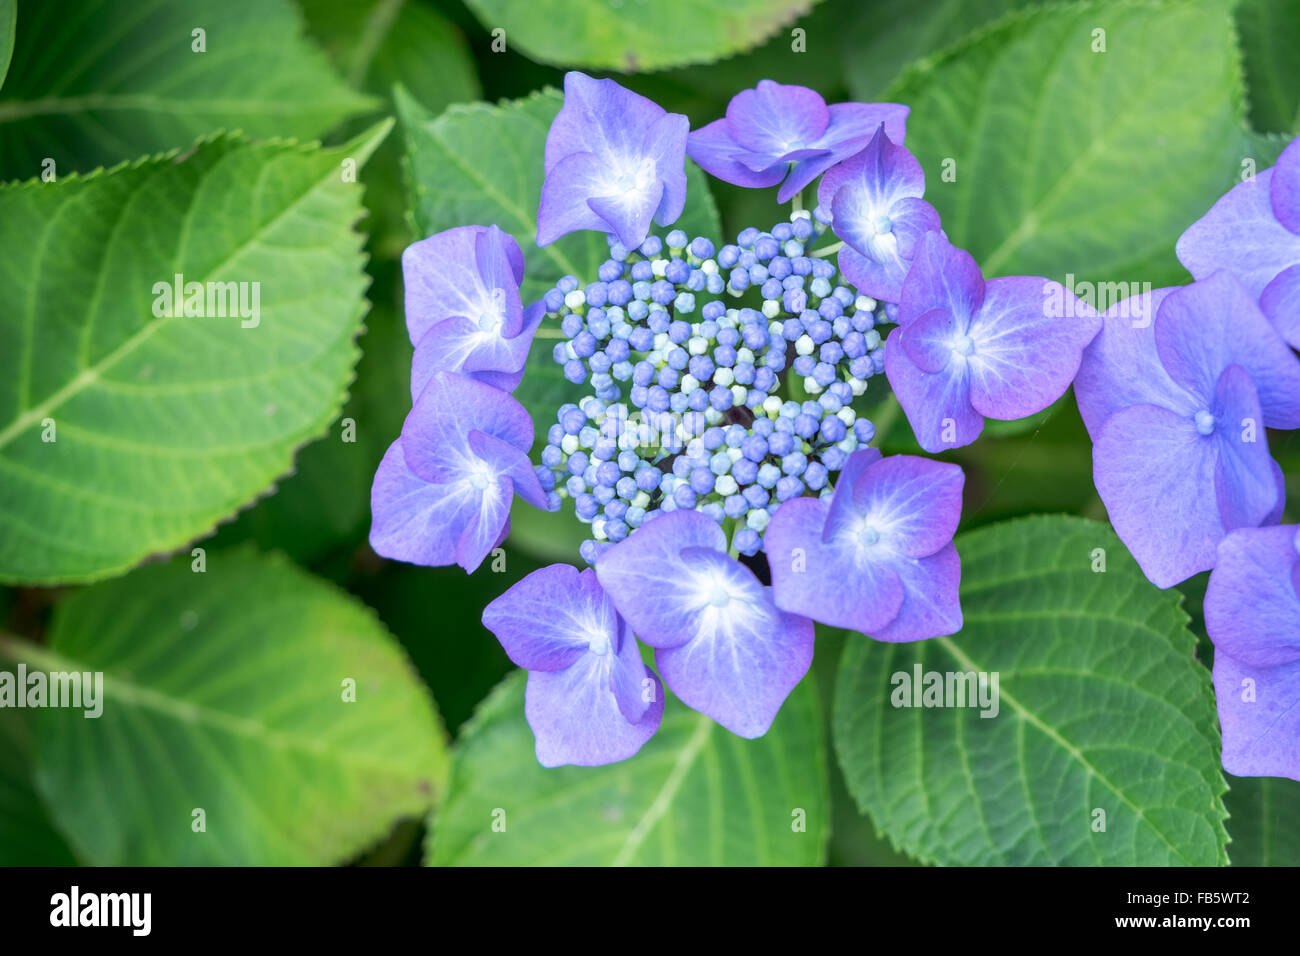 Flowerhead of Hydrangea plant Stock Photo